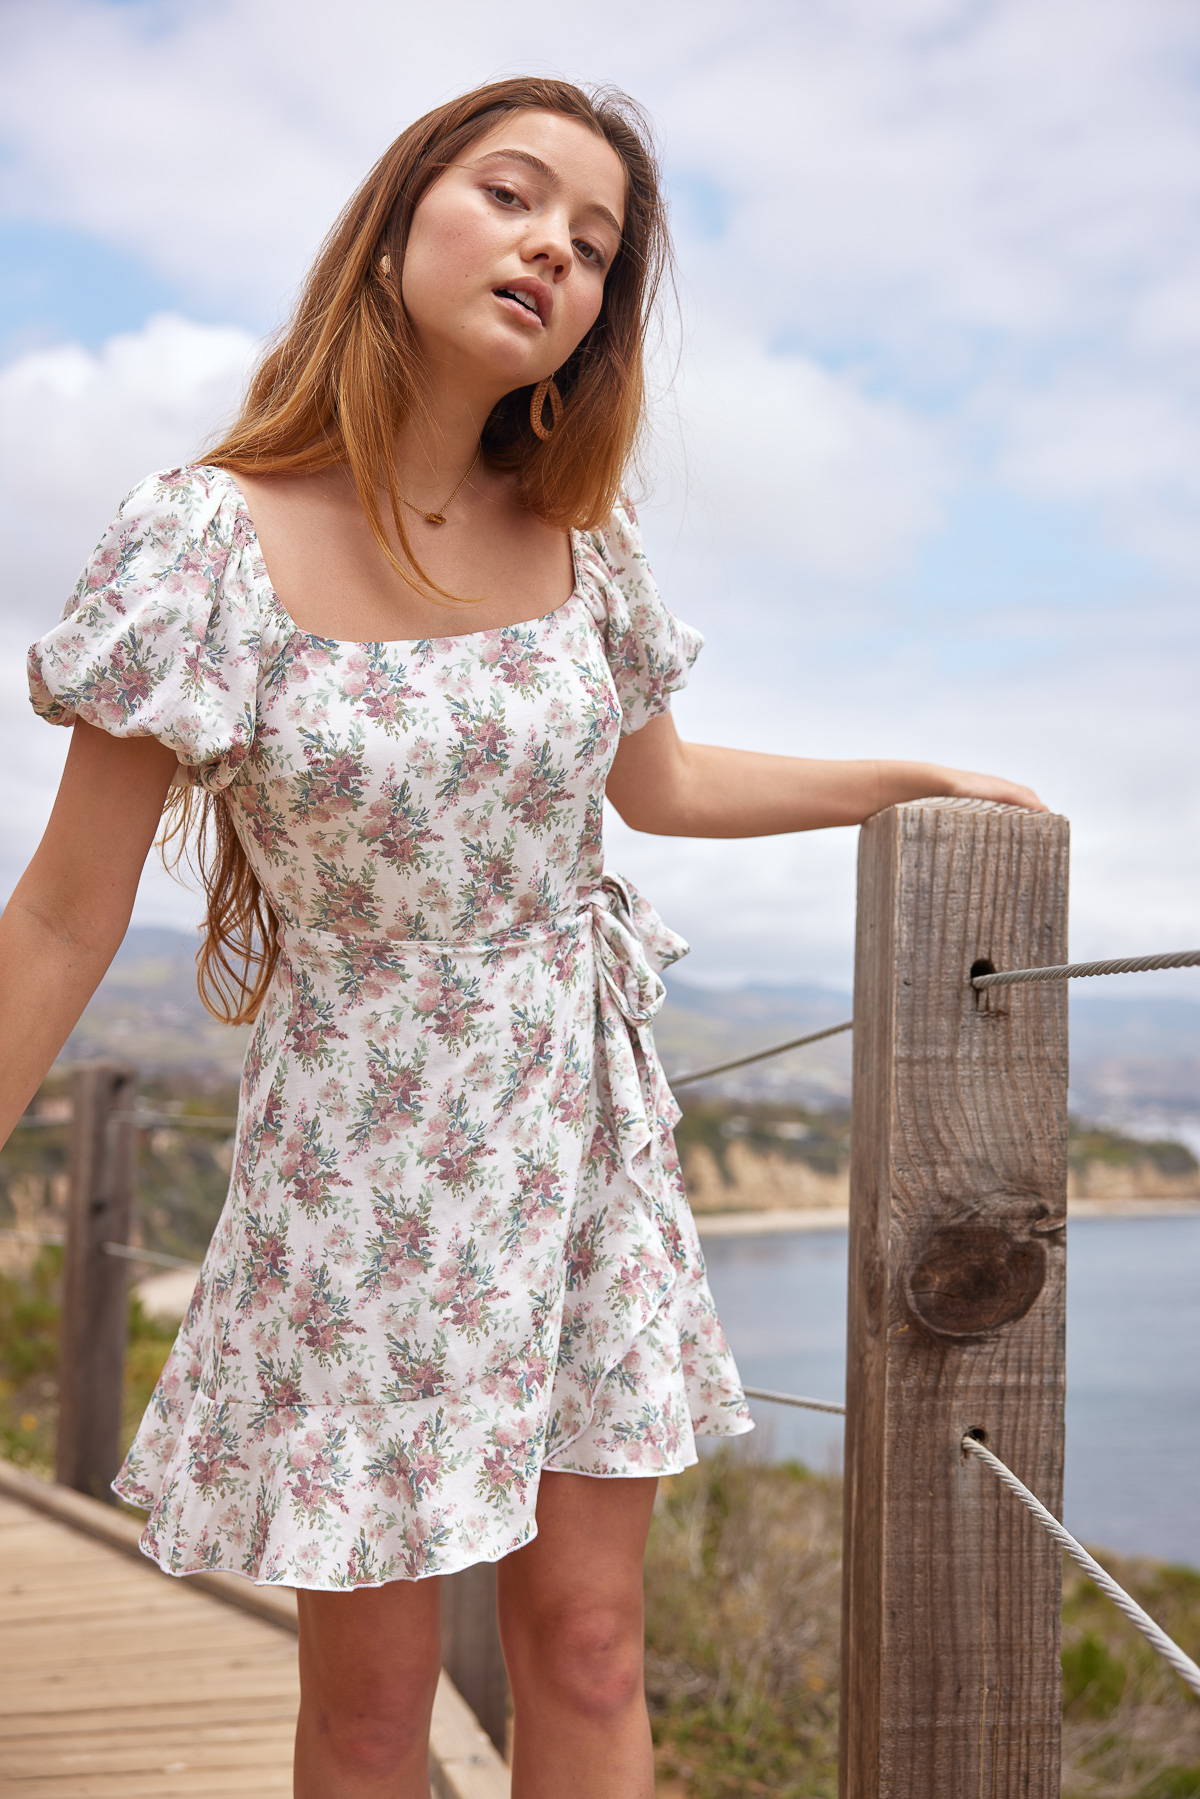 Trixxi sun-kissed summer, girl at ocean side beach pier, in floral wrap ruffle puff sleeve dress.